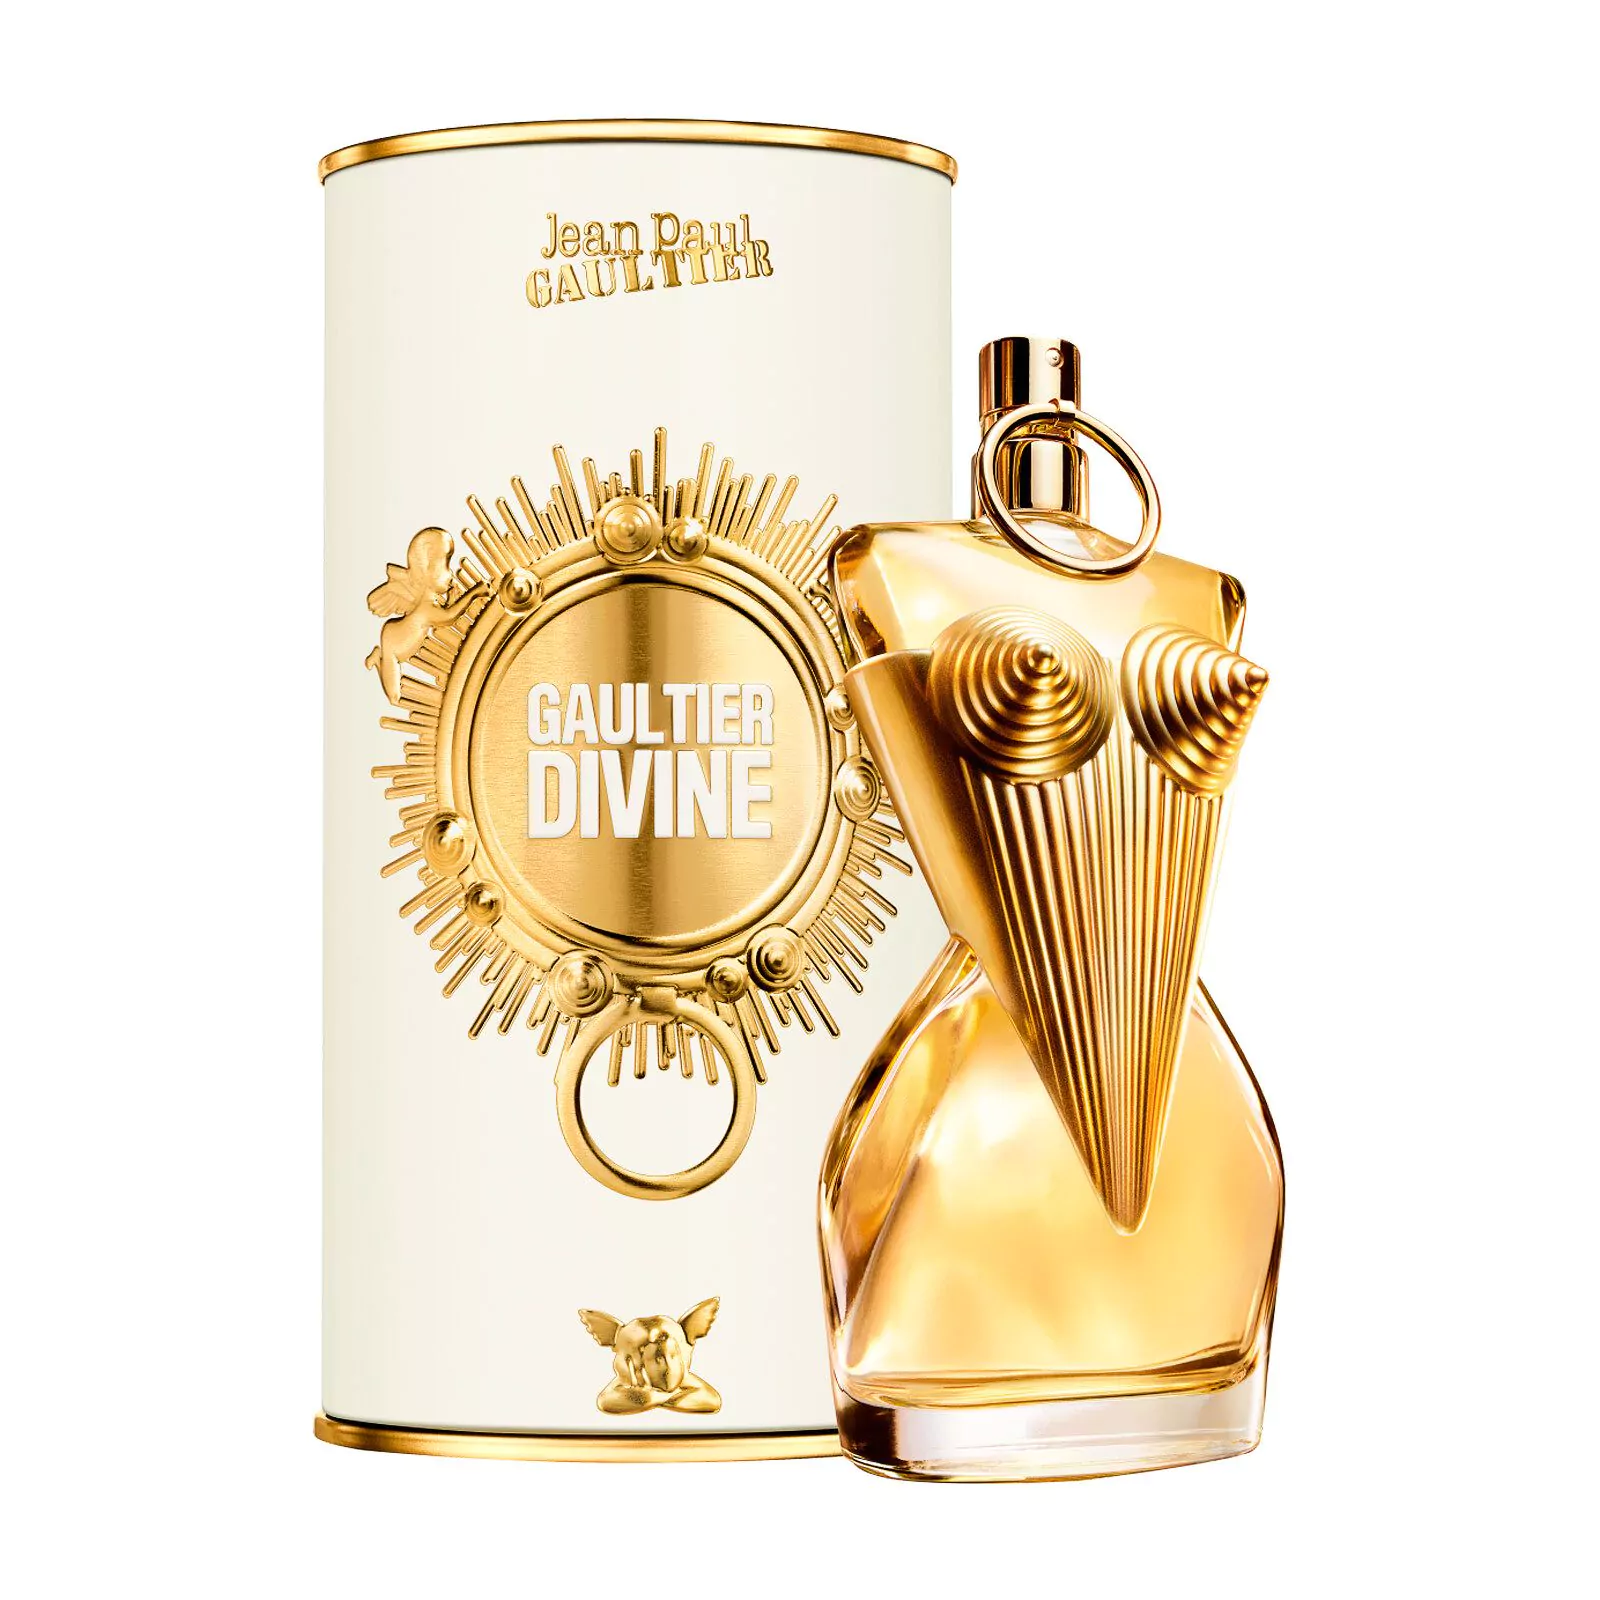 Новый аромат «Divine» от Jean Paul Gaultier, фото 1